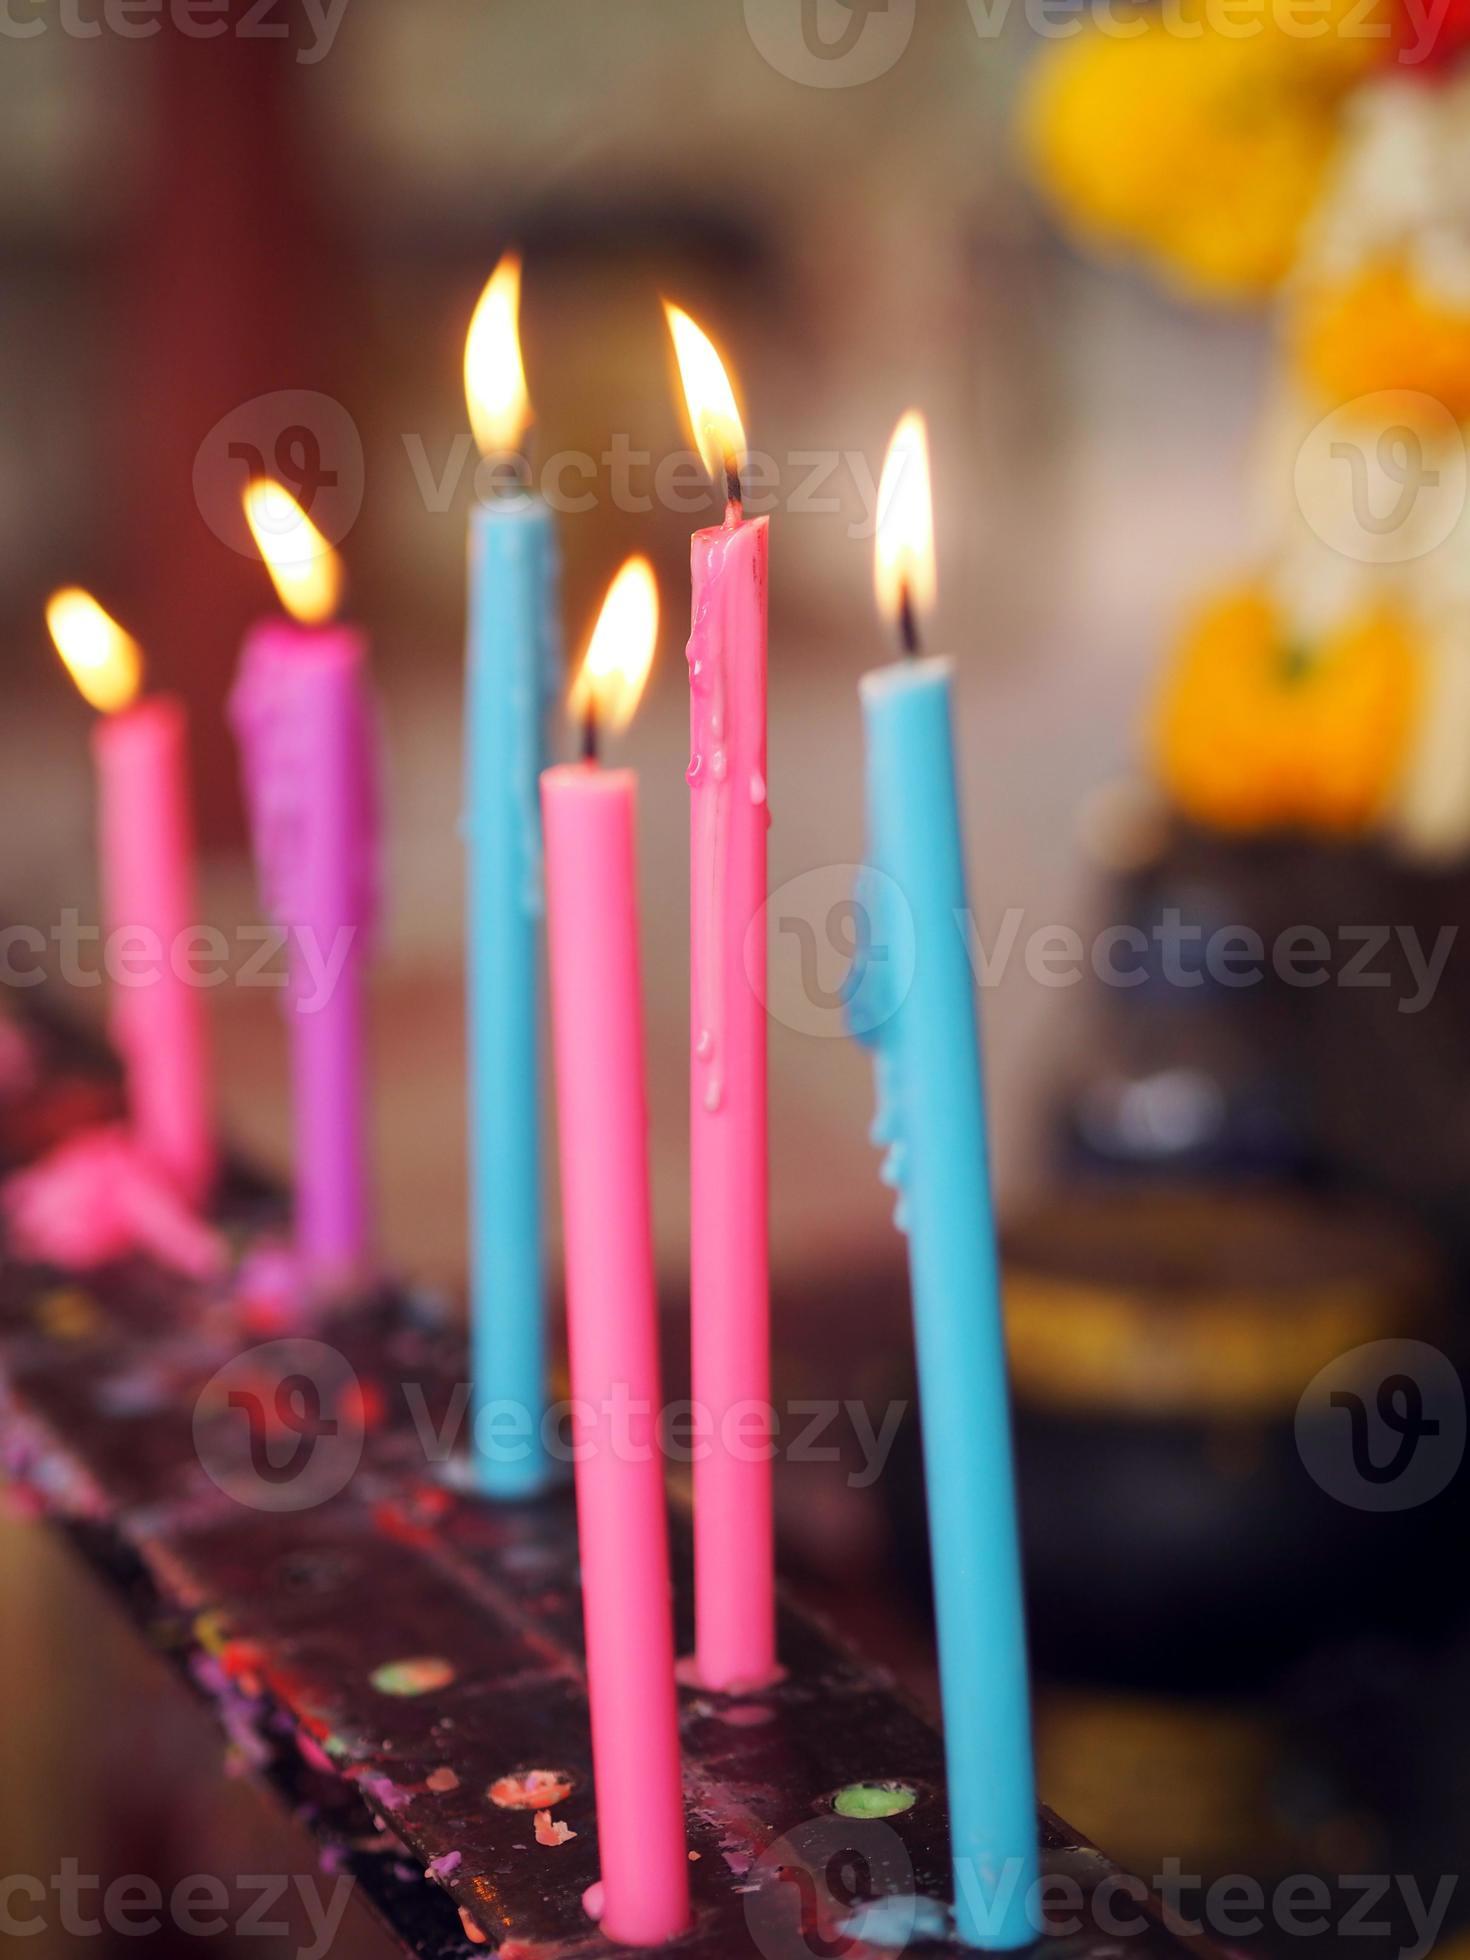 candele gialle colorate accese sul portacandele al tempio, a lume di candela  9336876 Stock Photo su Vecteezy